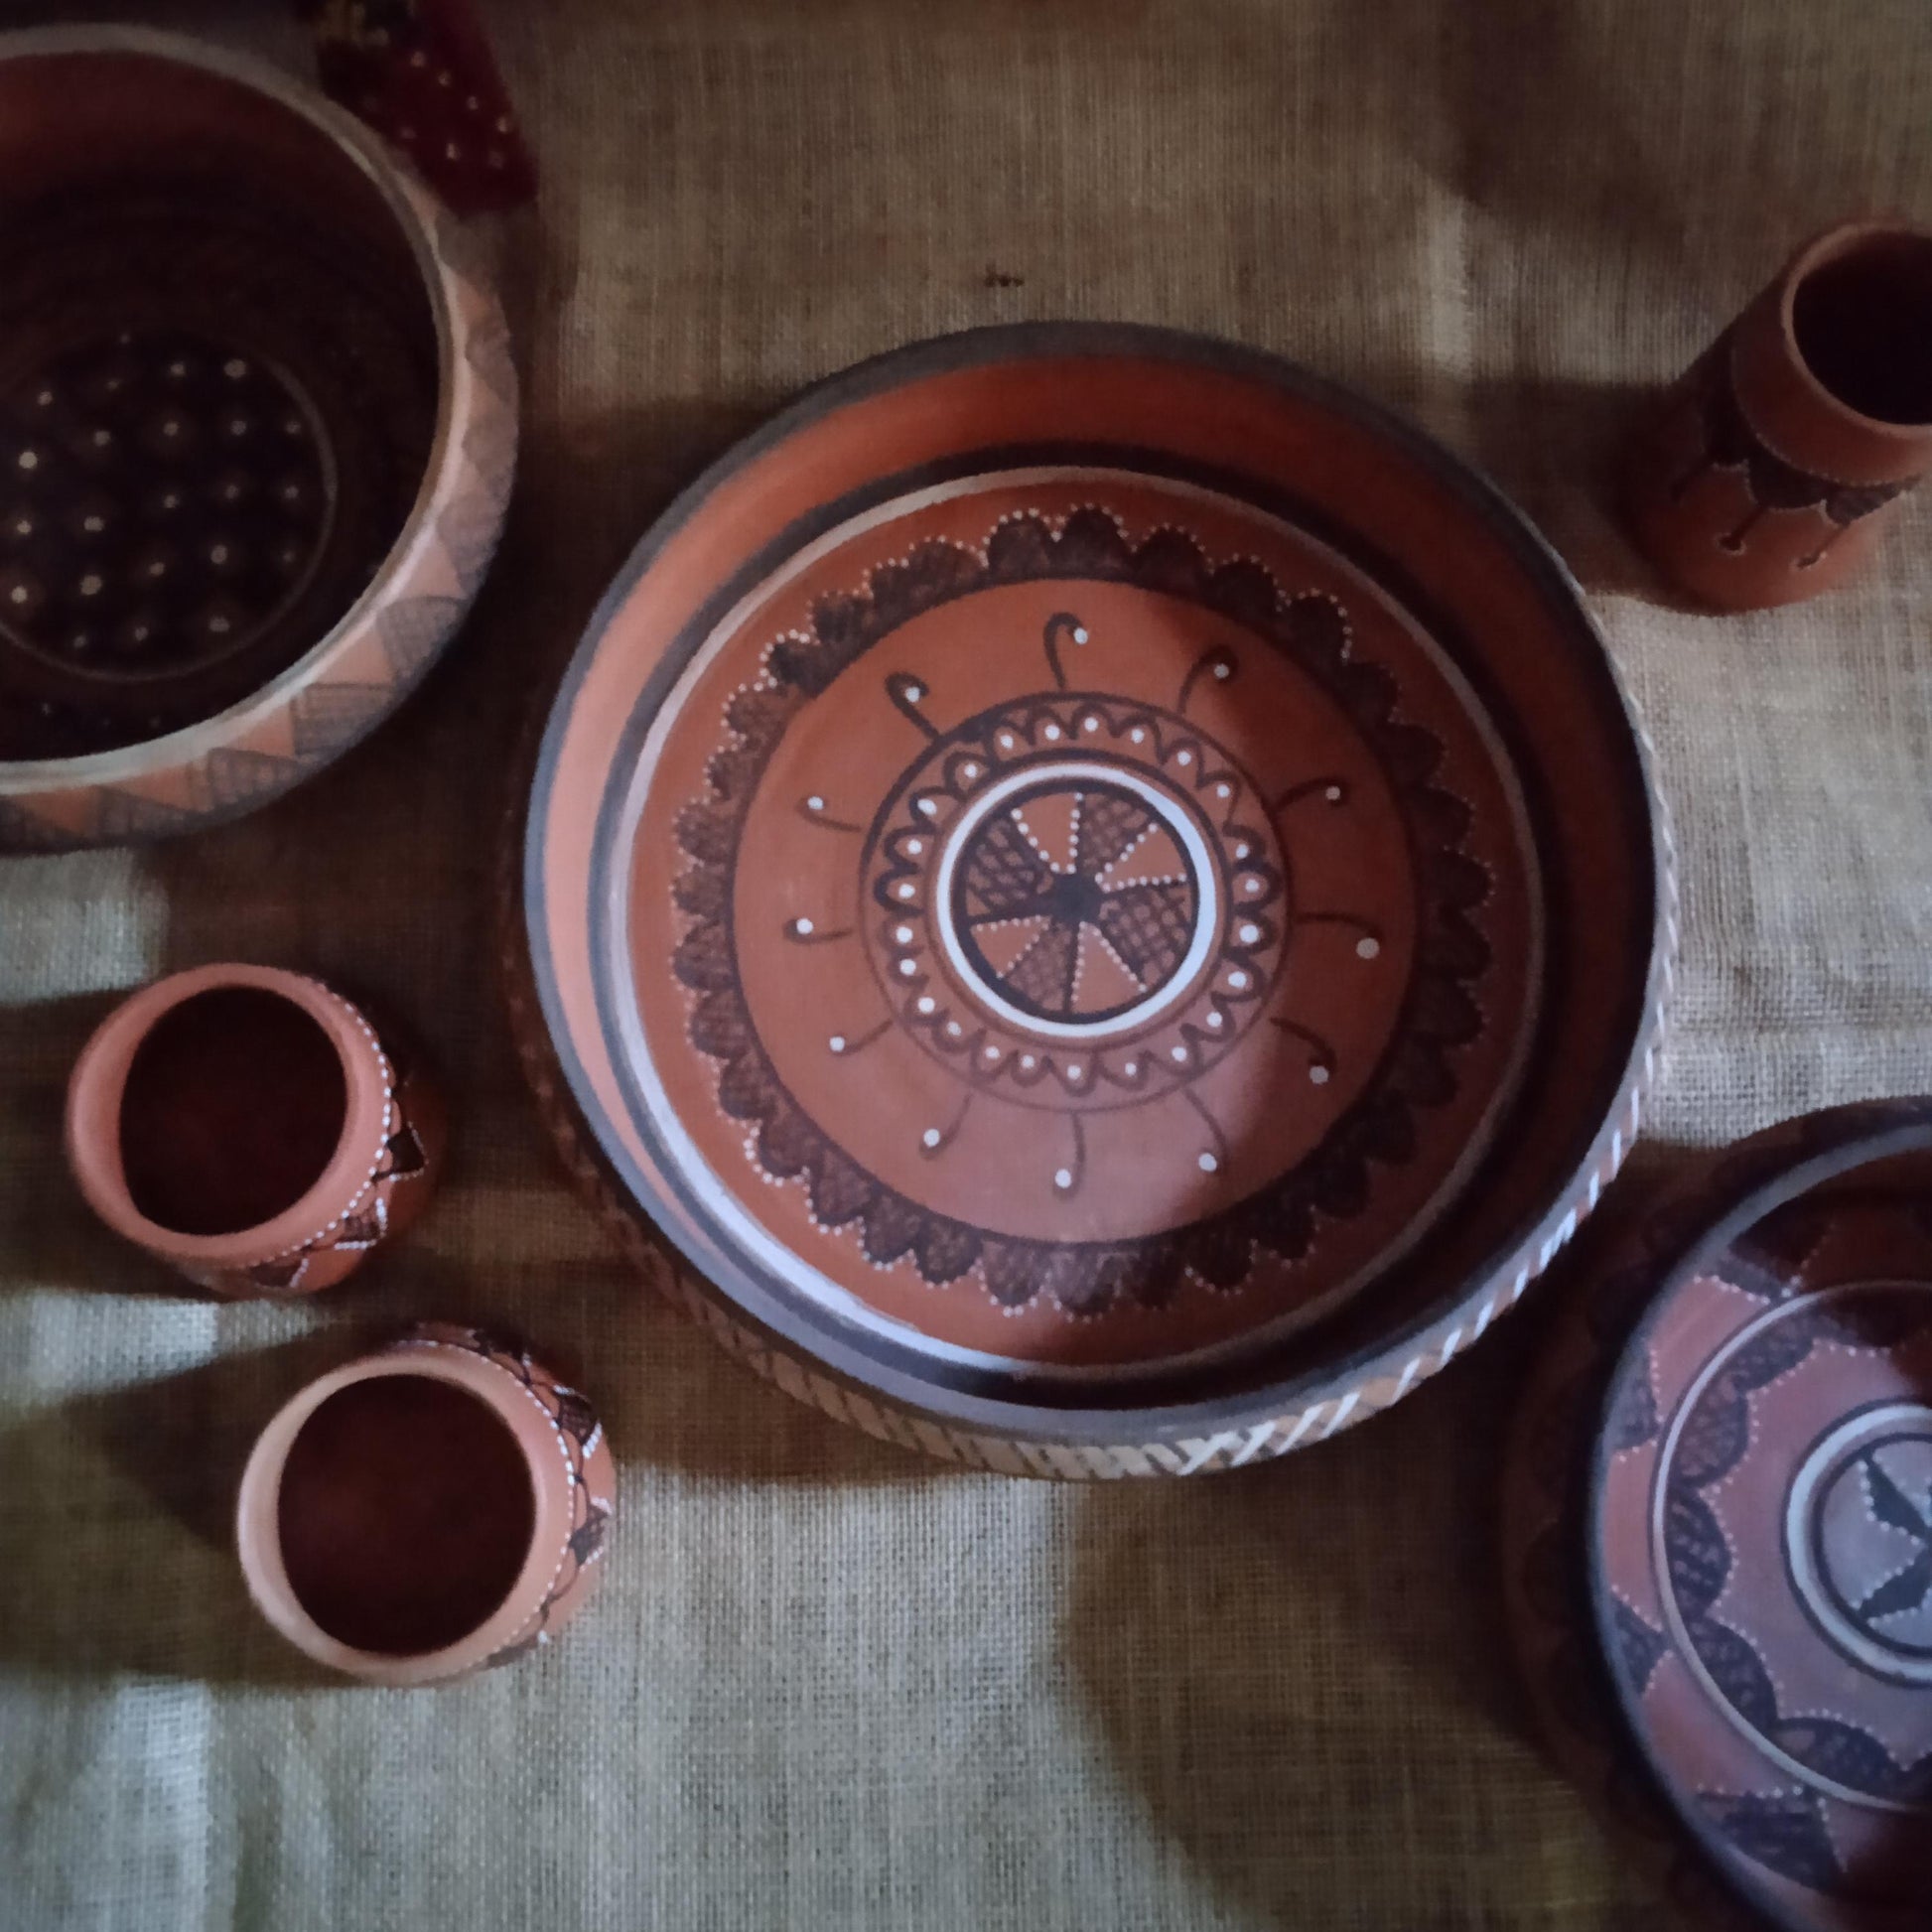 Gundiyali Terracotta Hand-painted Serving Platter - 11 Inch